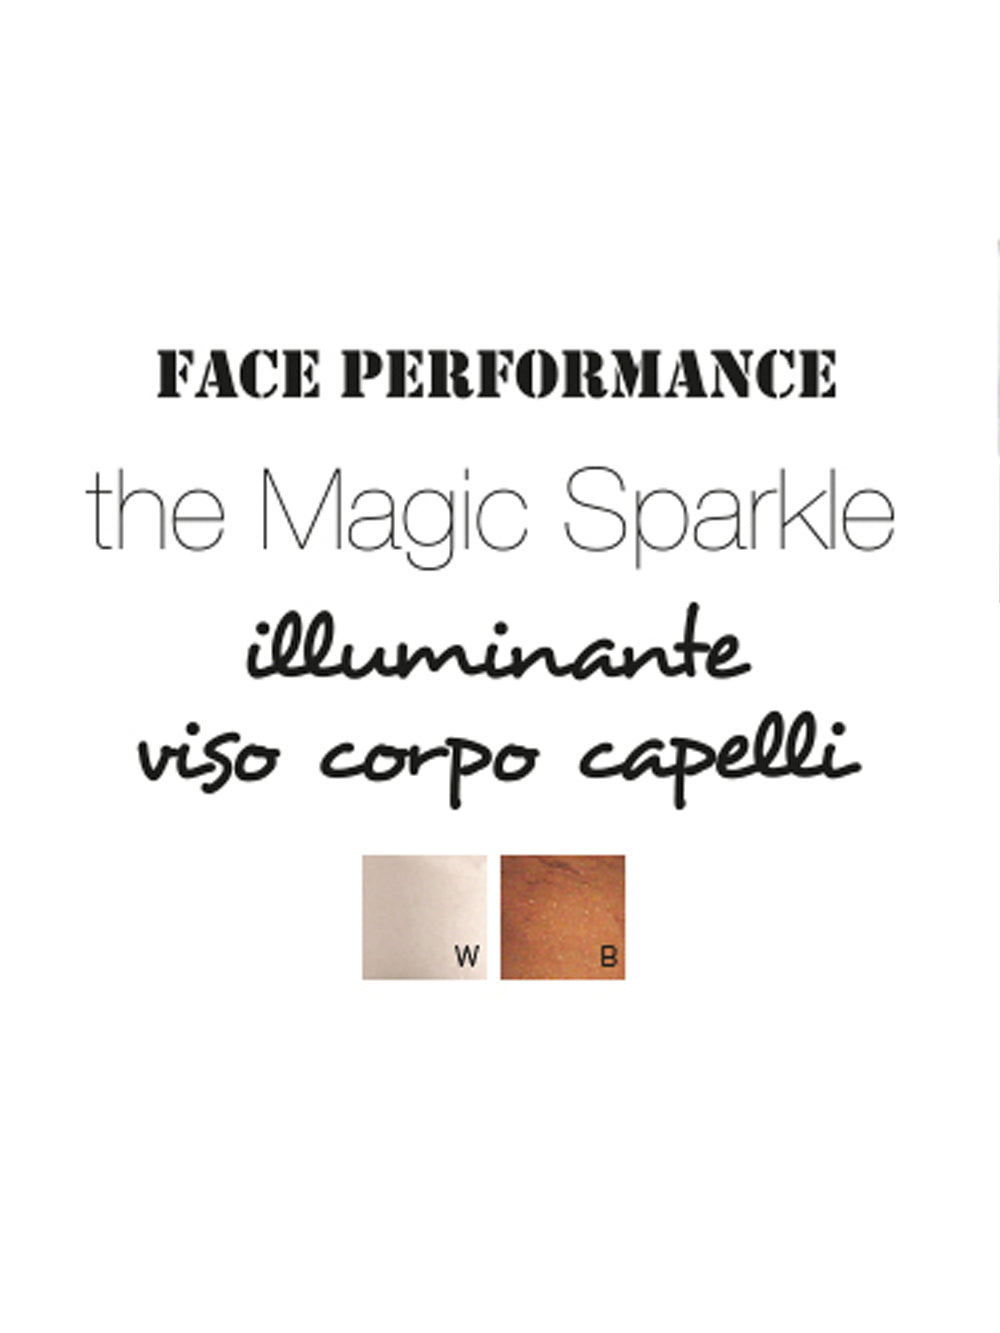 Magic Sparkle Bronze Glitter Illuminates Face, Body & Hair